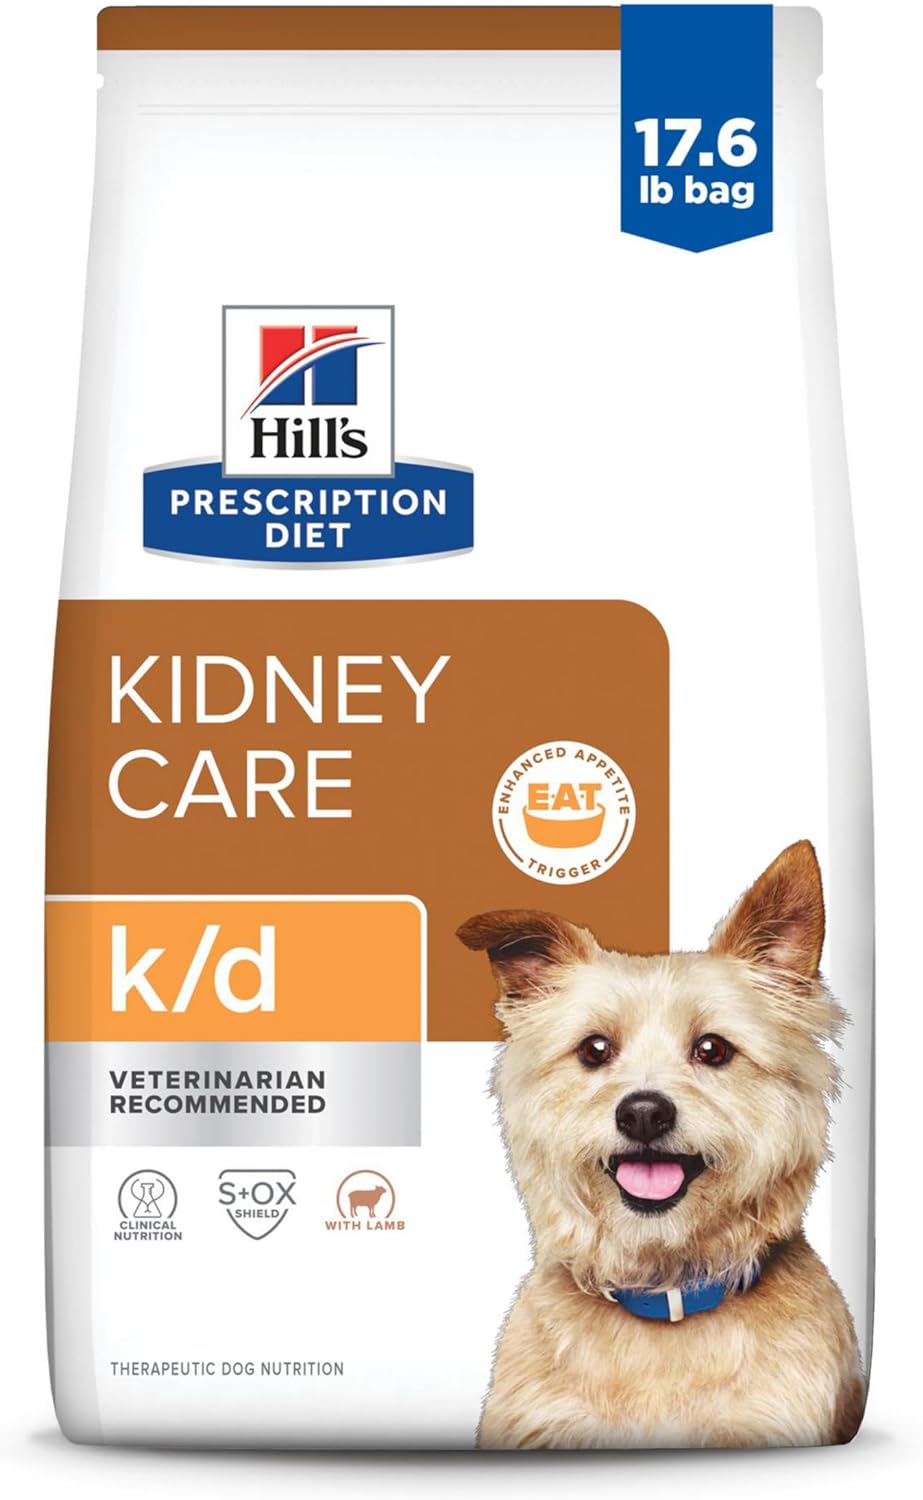 Hill's Prescription Diet k/d Kidney Care with Lamb Dry Dog Food, Veterinary Diet, 17.6 lb. Bag